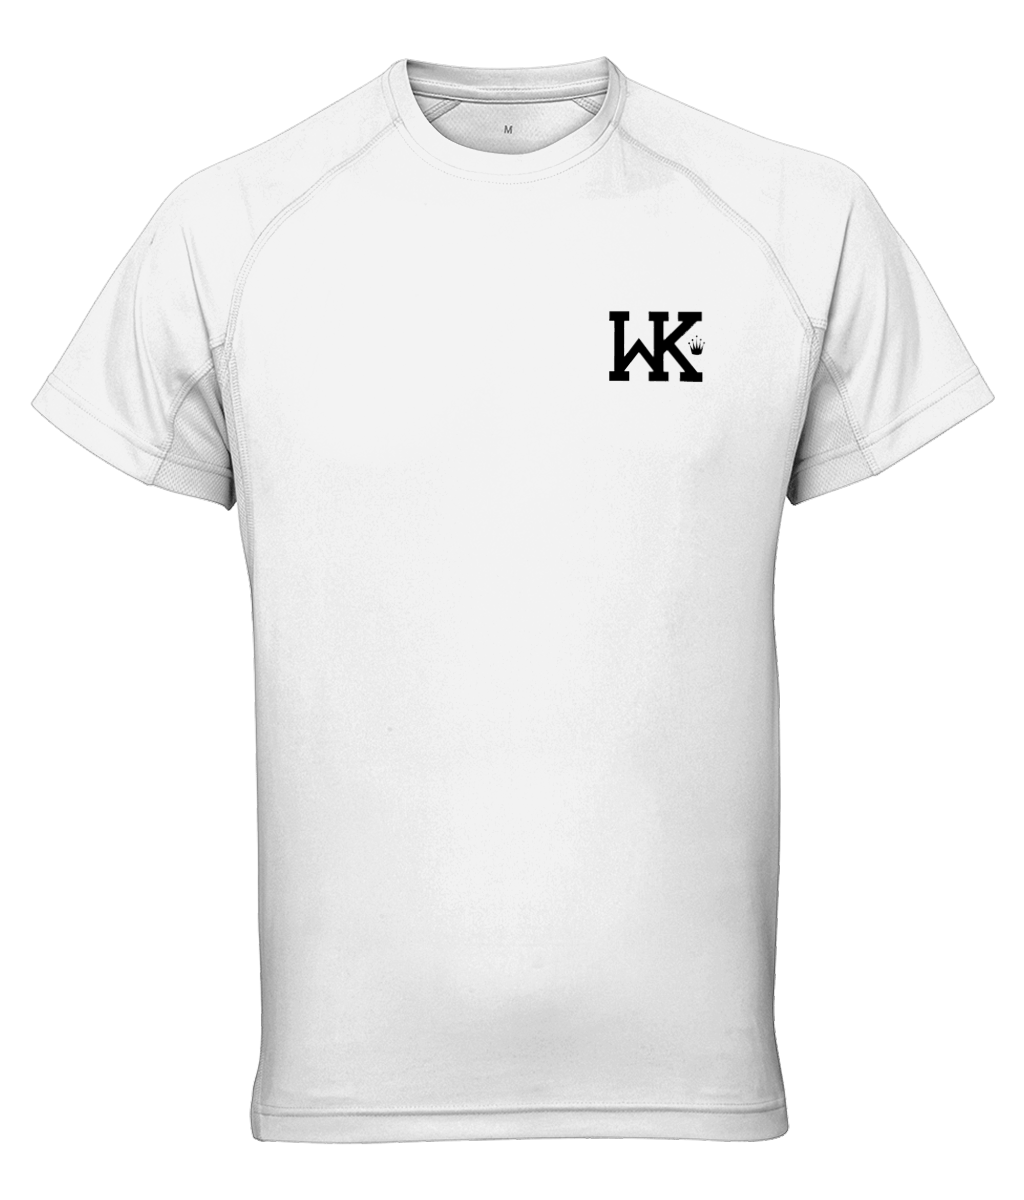 Walking Kings Boxing - TriDri® Performance T-shirt